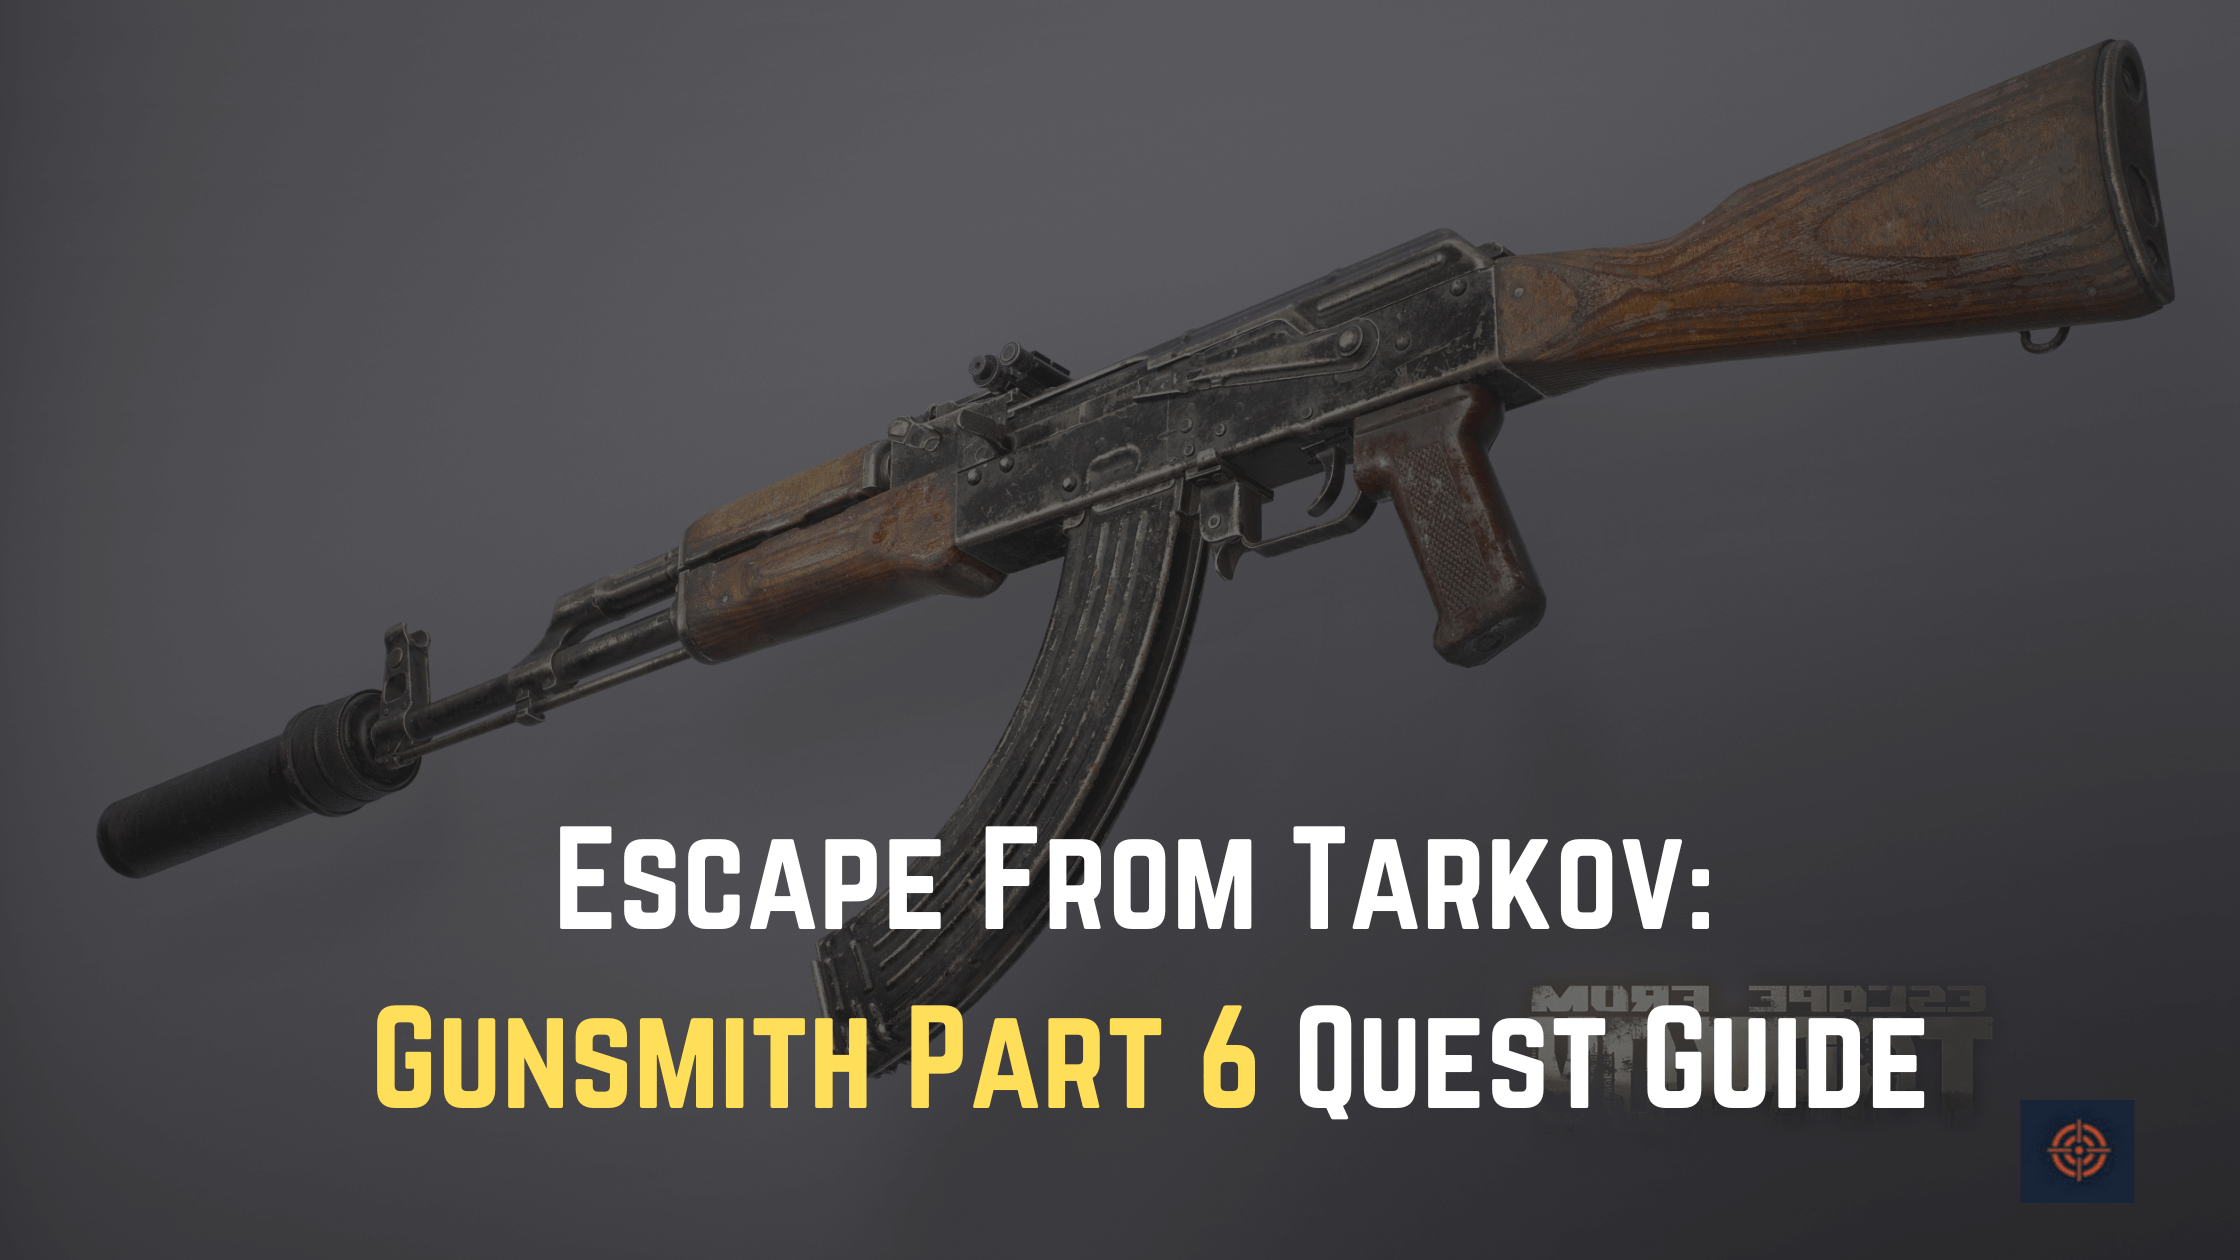 Gunsmith Part 6 Escape from Tarkov